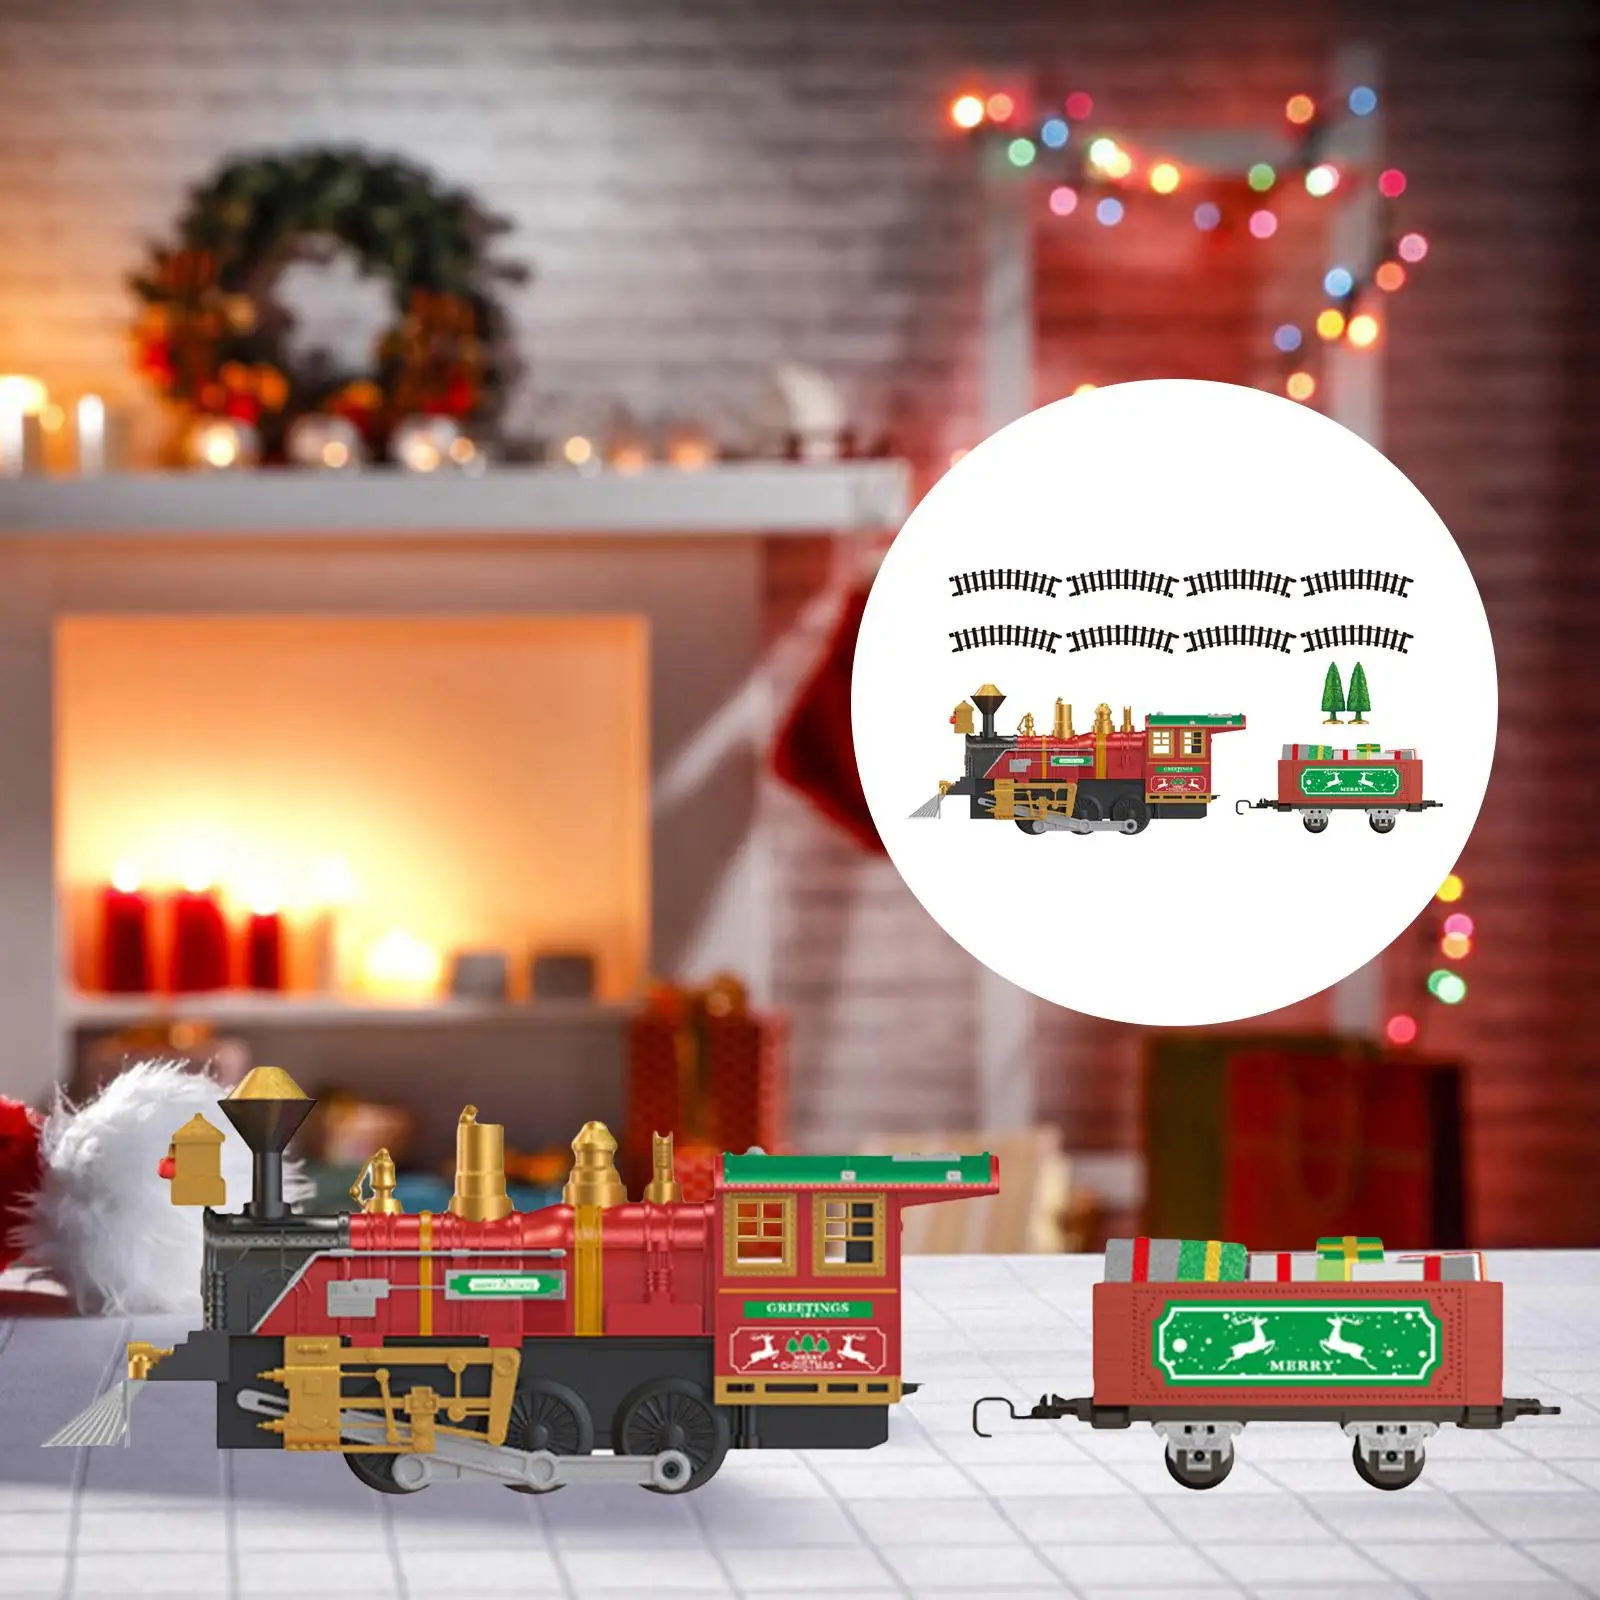 8 Tracks Electric Train Set Christmas Holiday Train Railway Train Set with